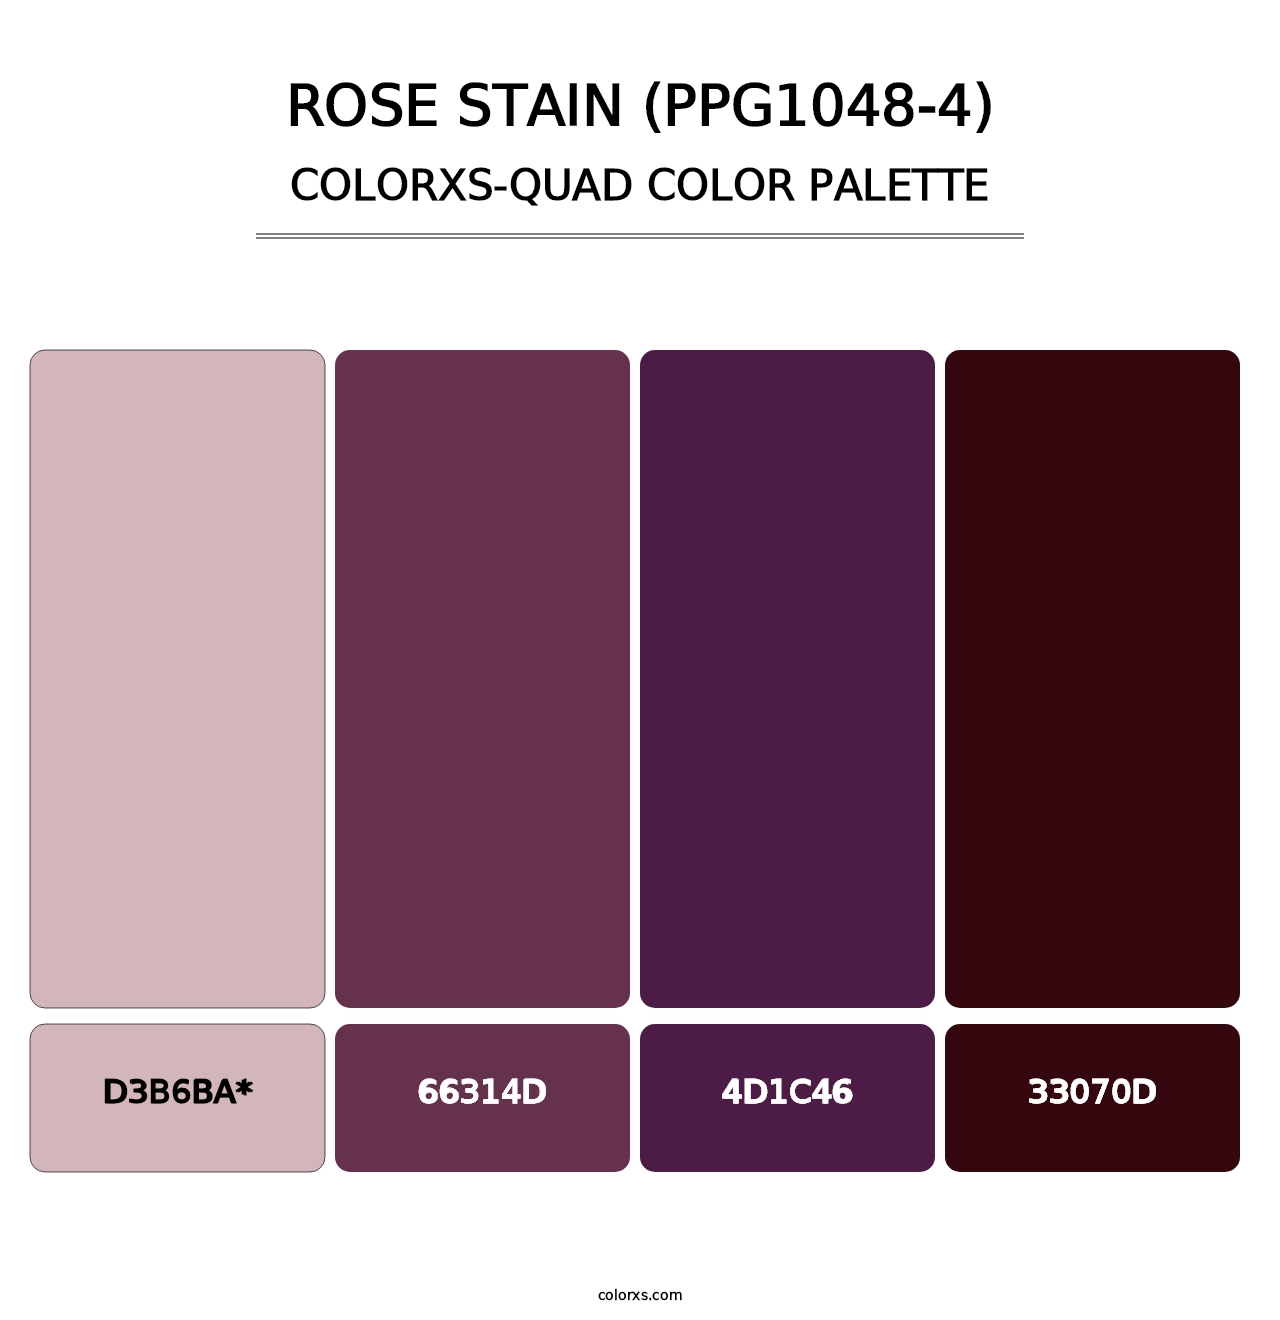 Rose Stain (PPG1048-4) - Colorxs Quad Palette